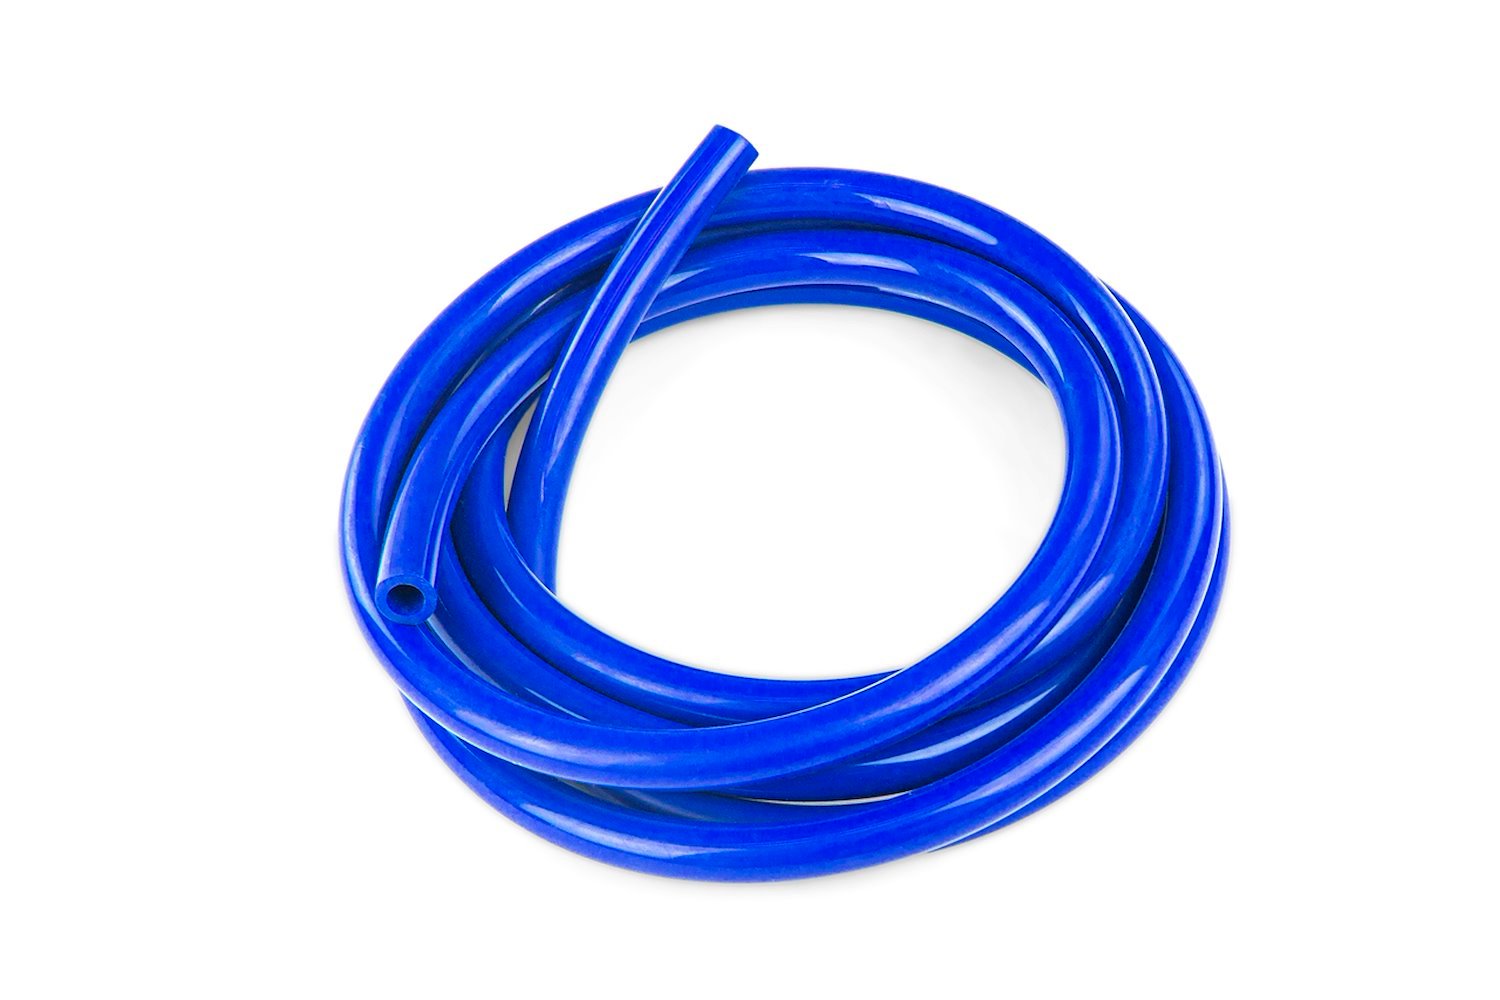 HTSVH95-BLUEx25 High-Temperature Silicone Vacuum Hose Tubing, 3/8 in. ID, 25 ft. Roll, Blue